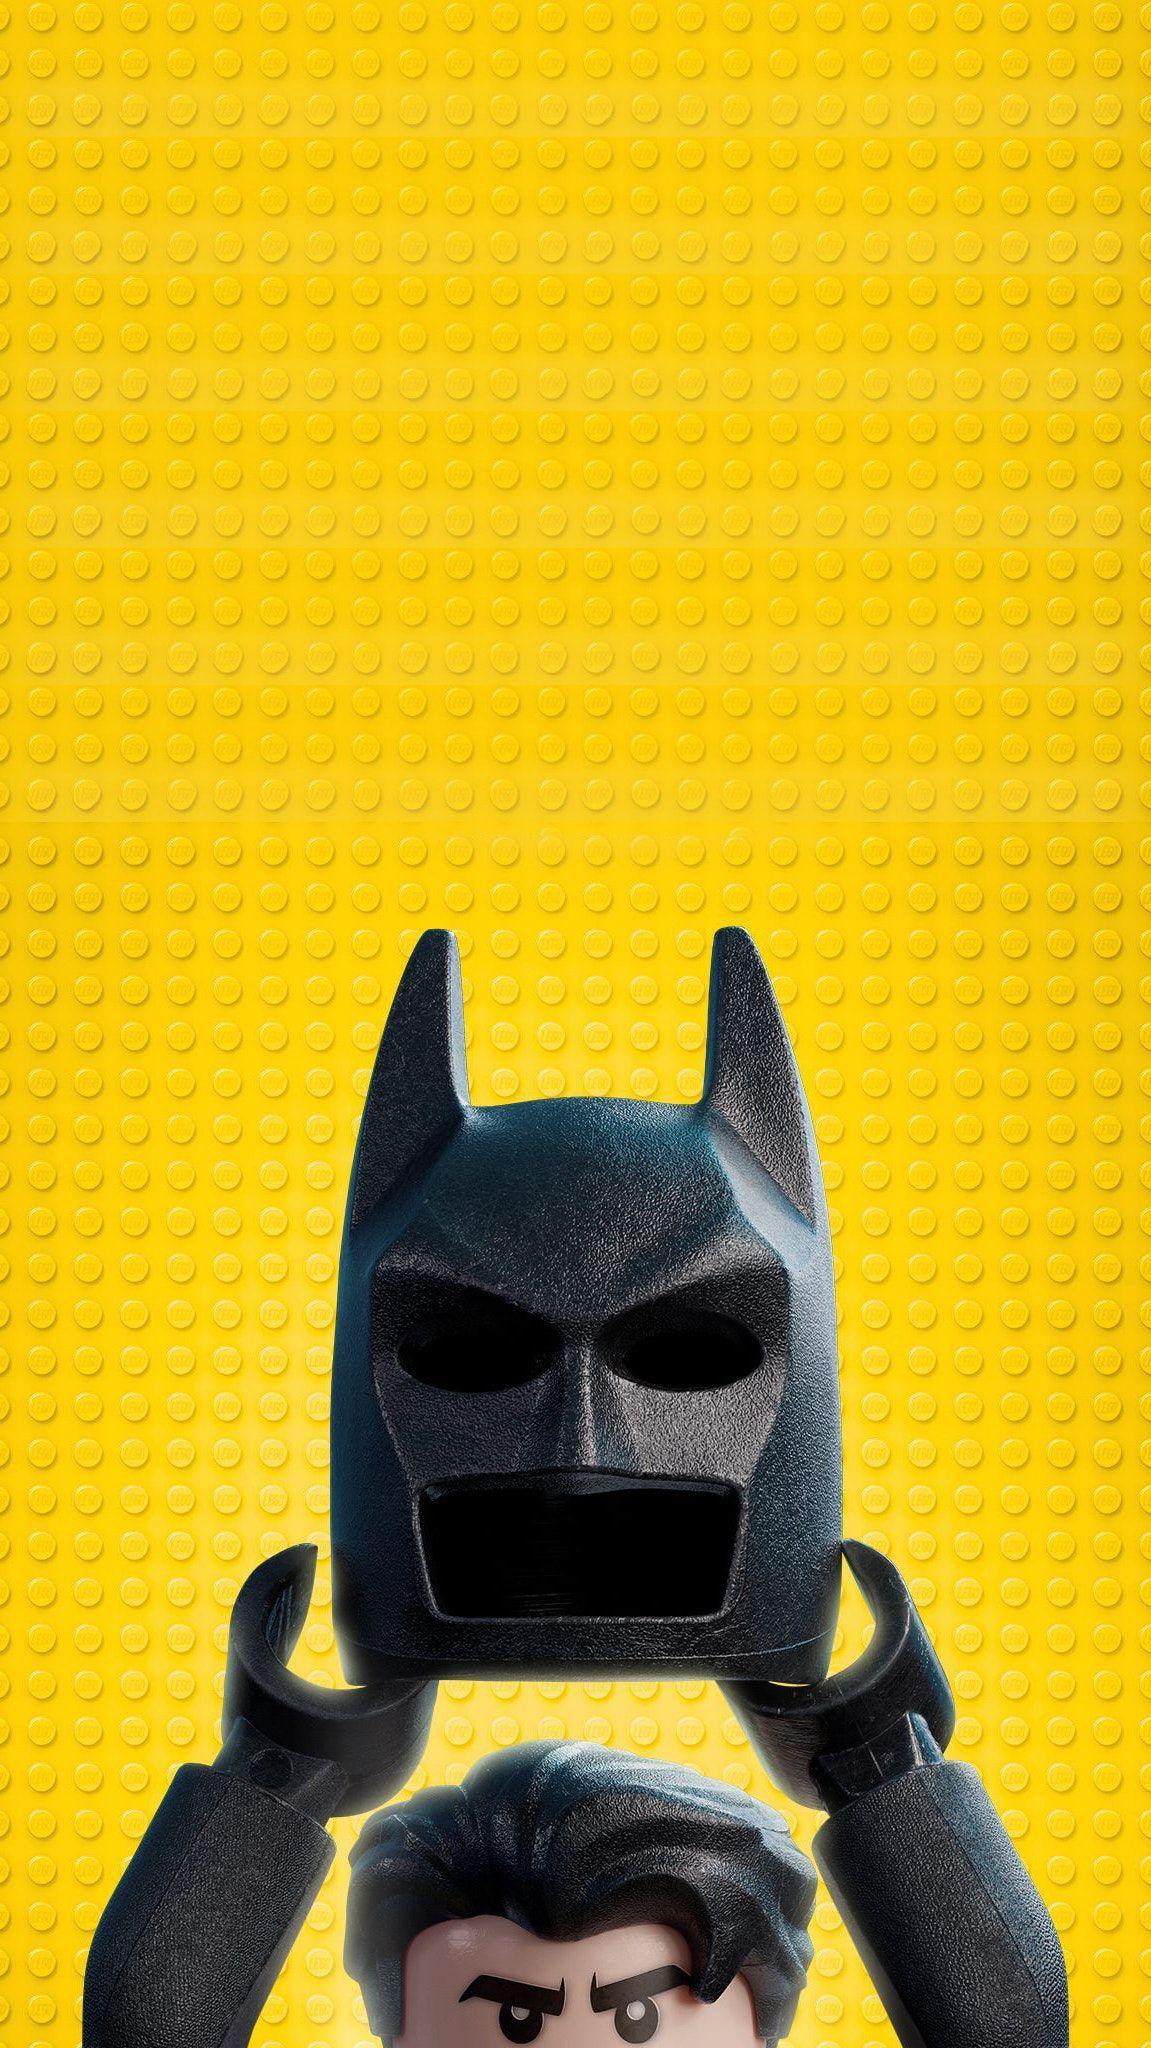 LEGO Phone Wallpaper Free LEGO Phone Background